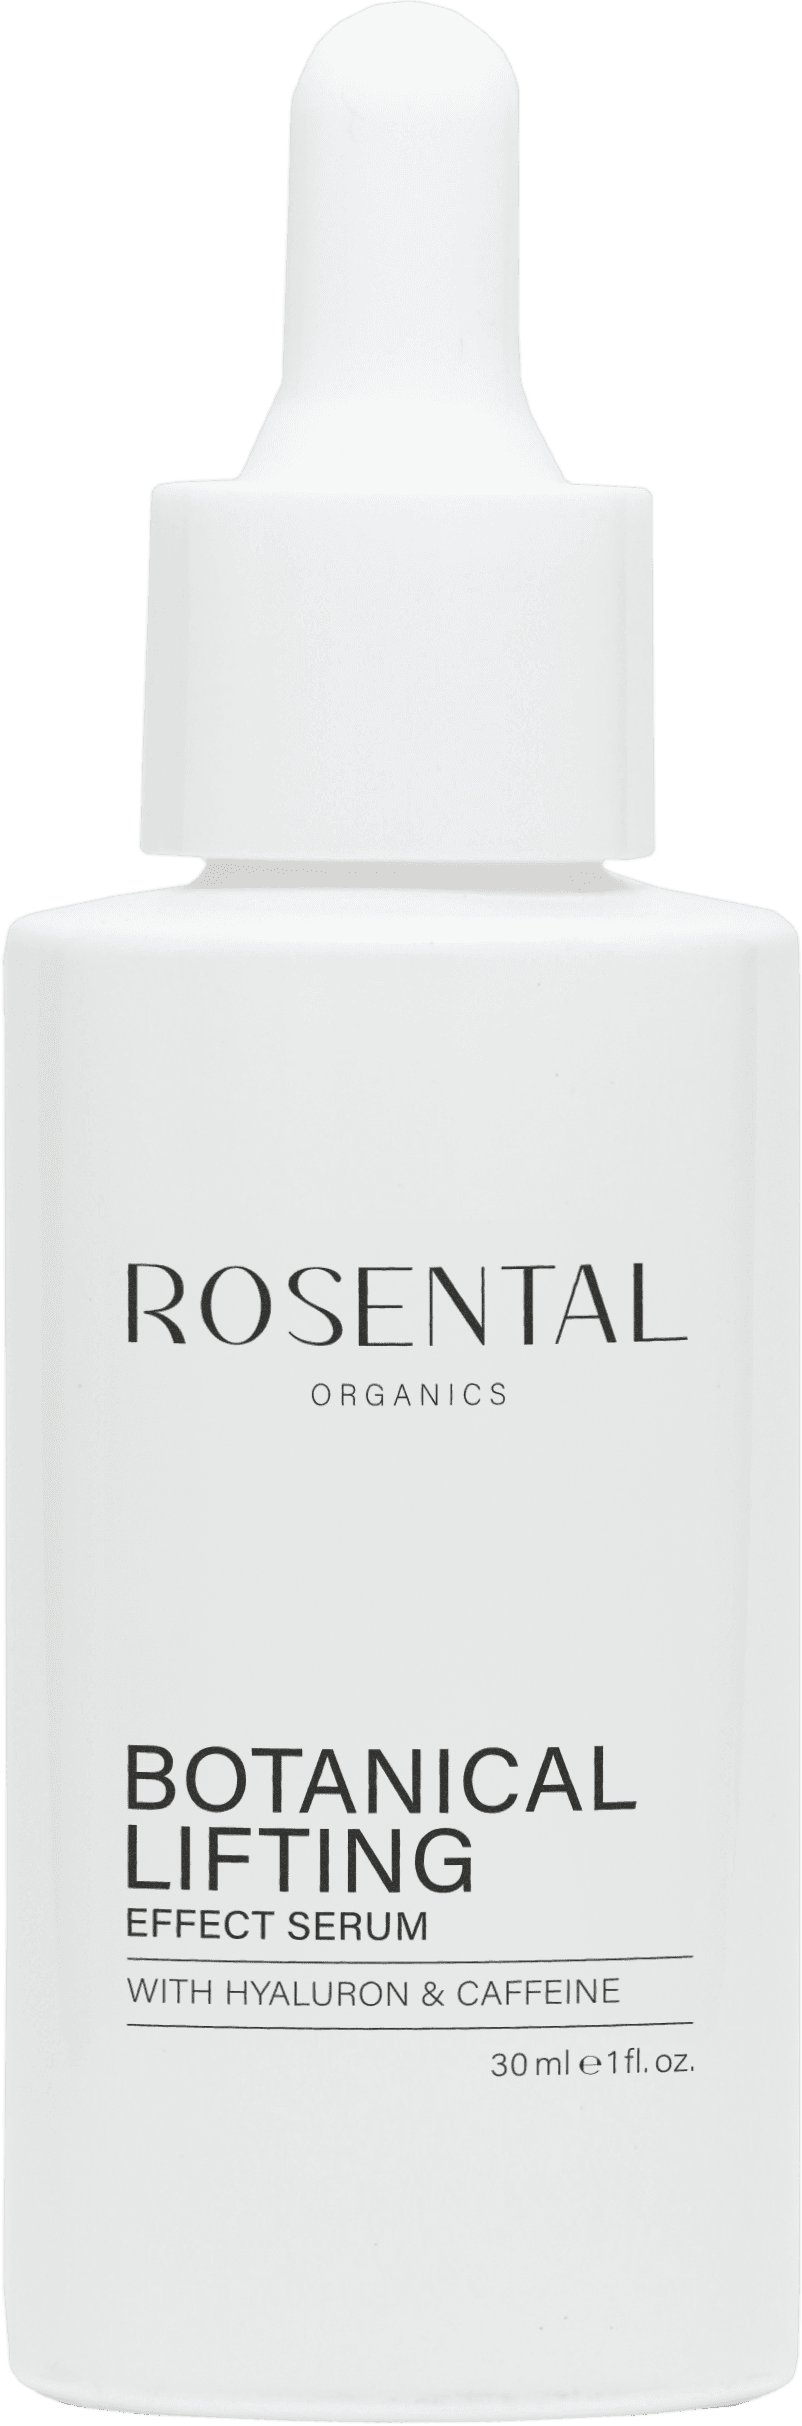 Rosental Face Care - BOTANICAL LIFTING EFFECT SERUM